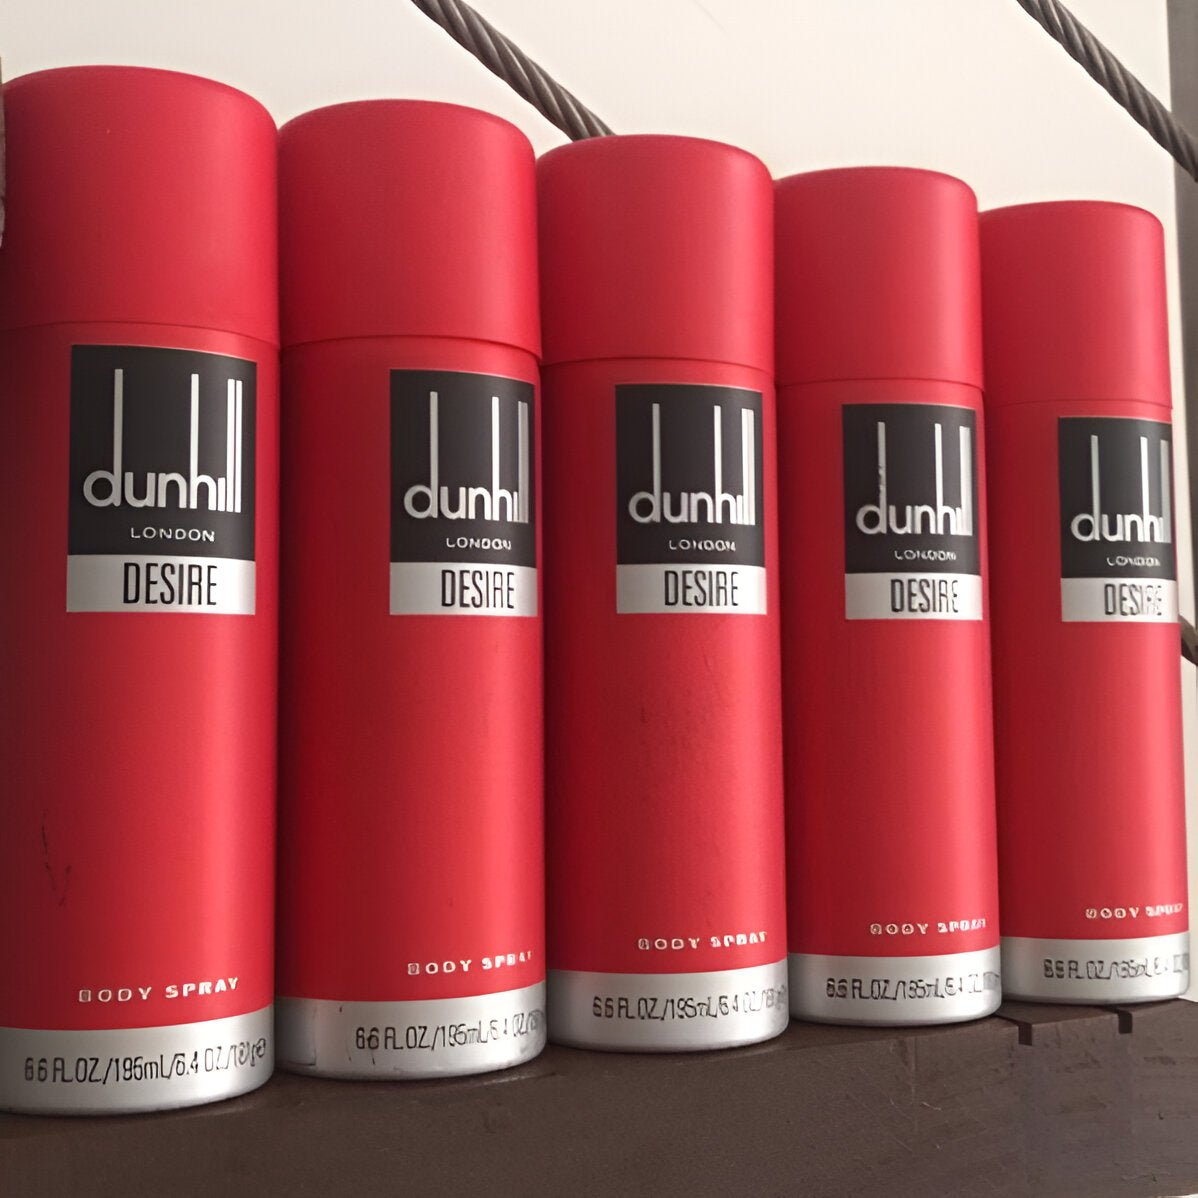 Dunhill Desire Red Deodorant Body Spray | My Perfume Shop Australia